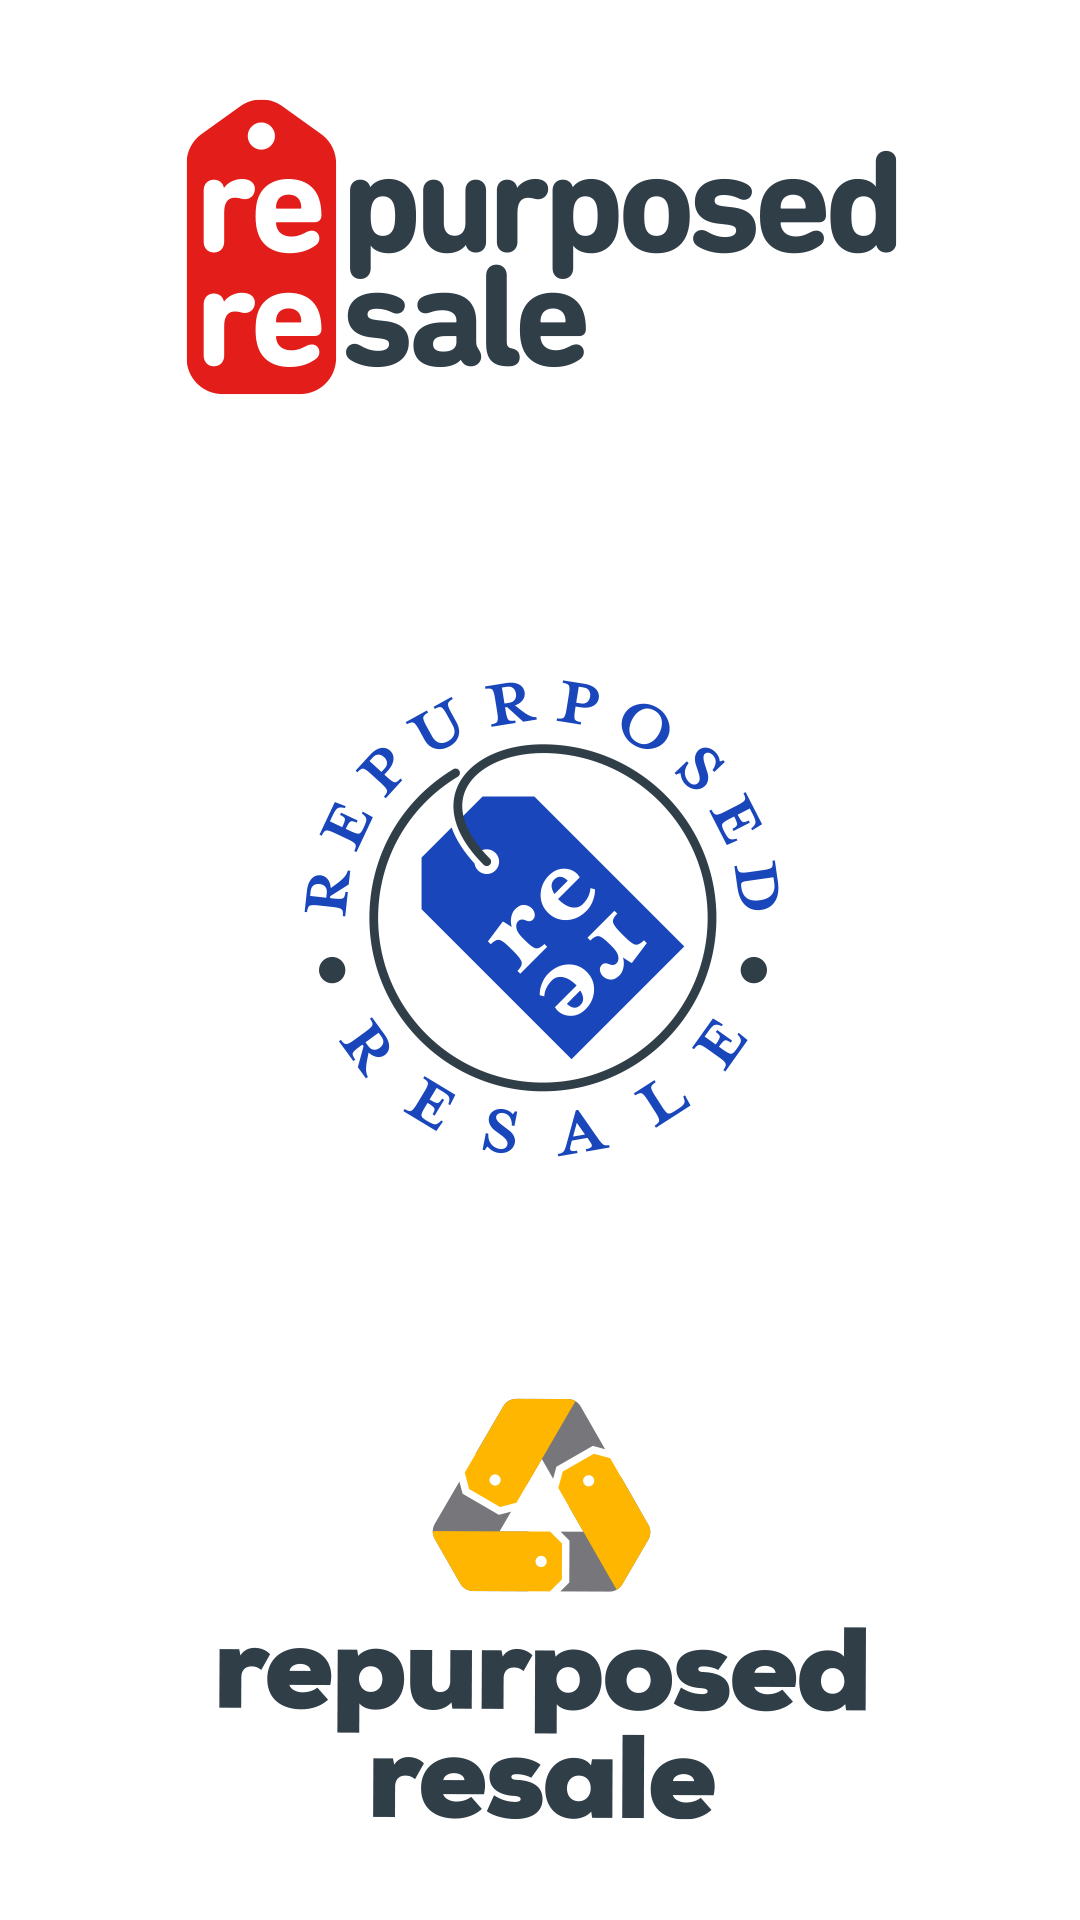 repurposed resale logo compositions